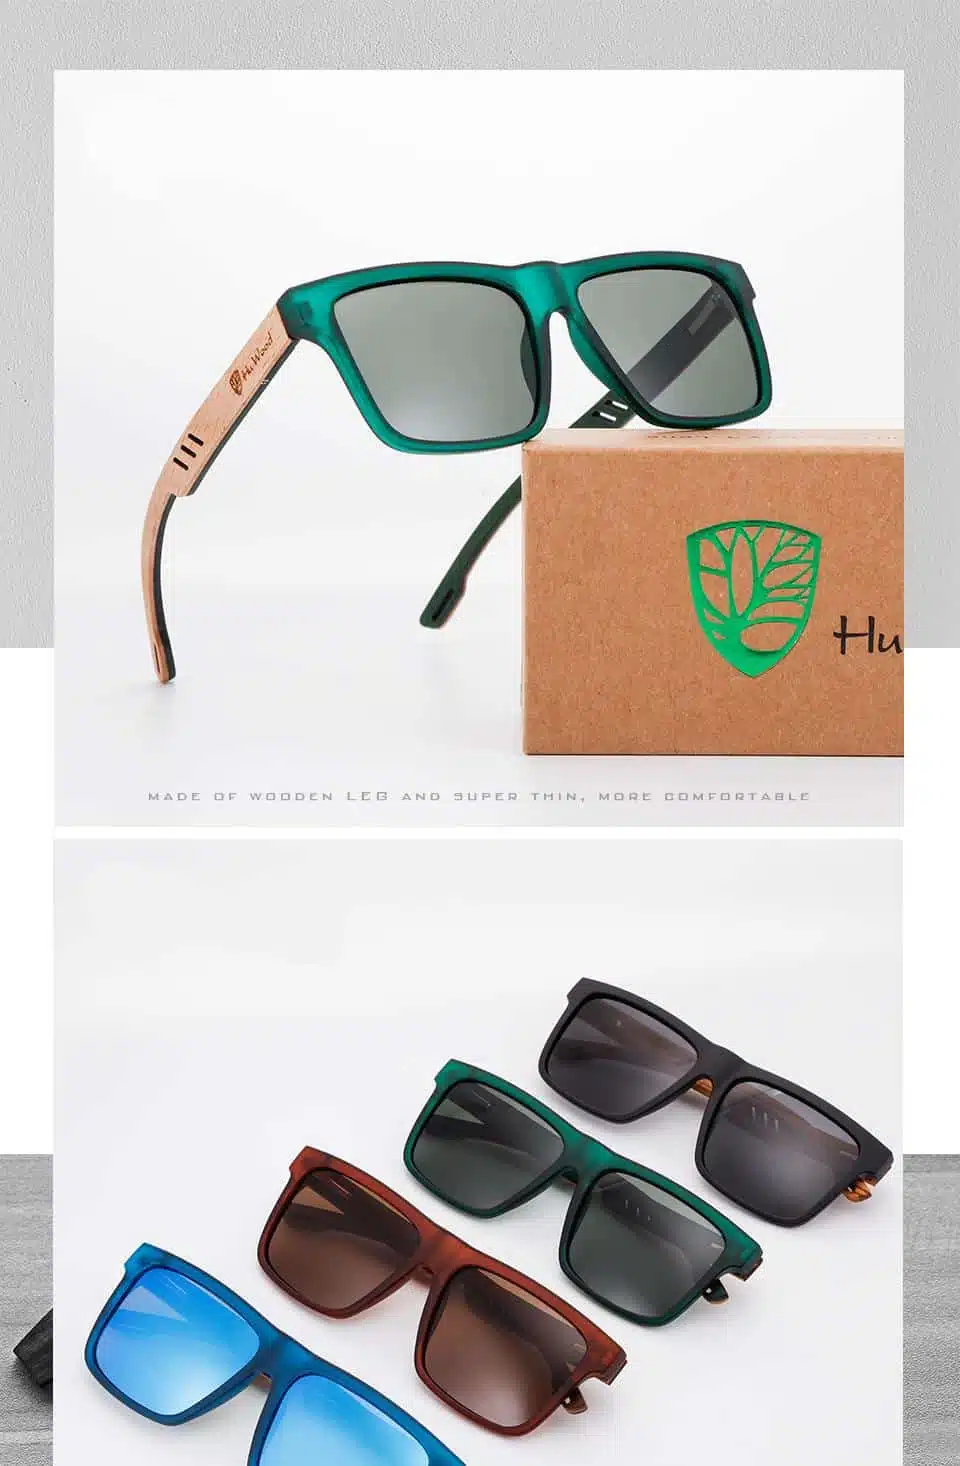 Hu Wood 2020 New High Quality Square Sunglasses Men Polarized UV400 Fashion Sunglass Mirror Sport sun glasses Driving oculos